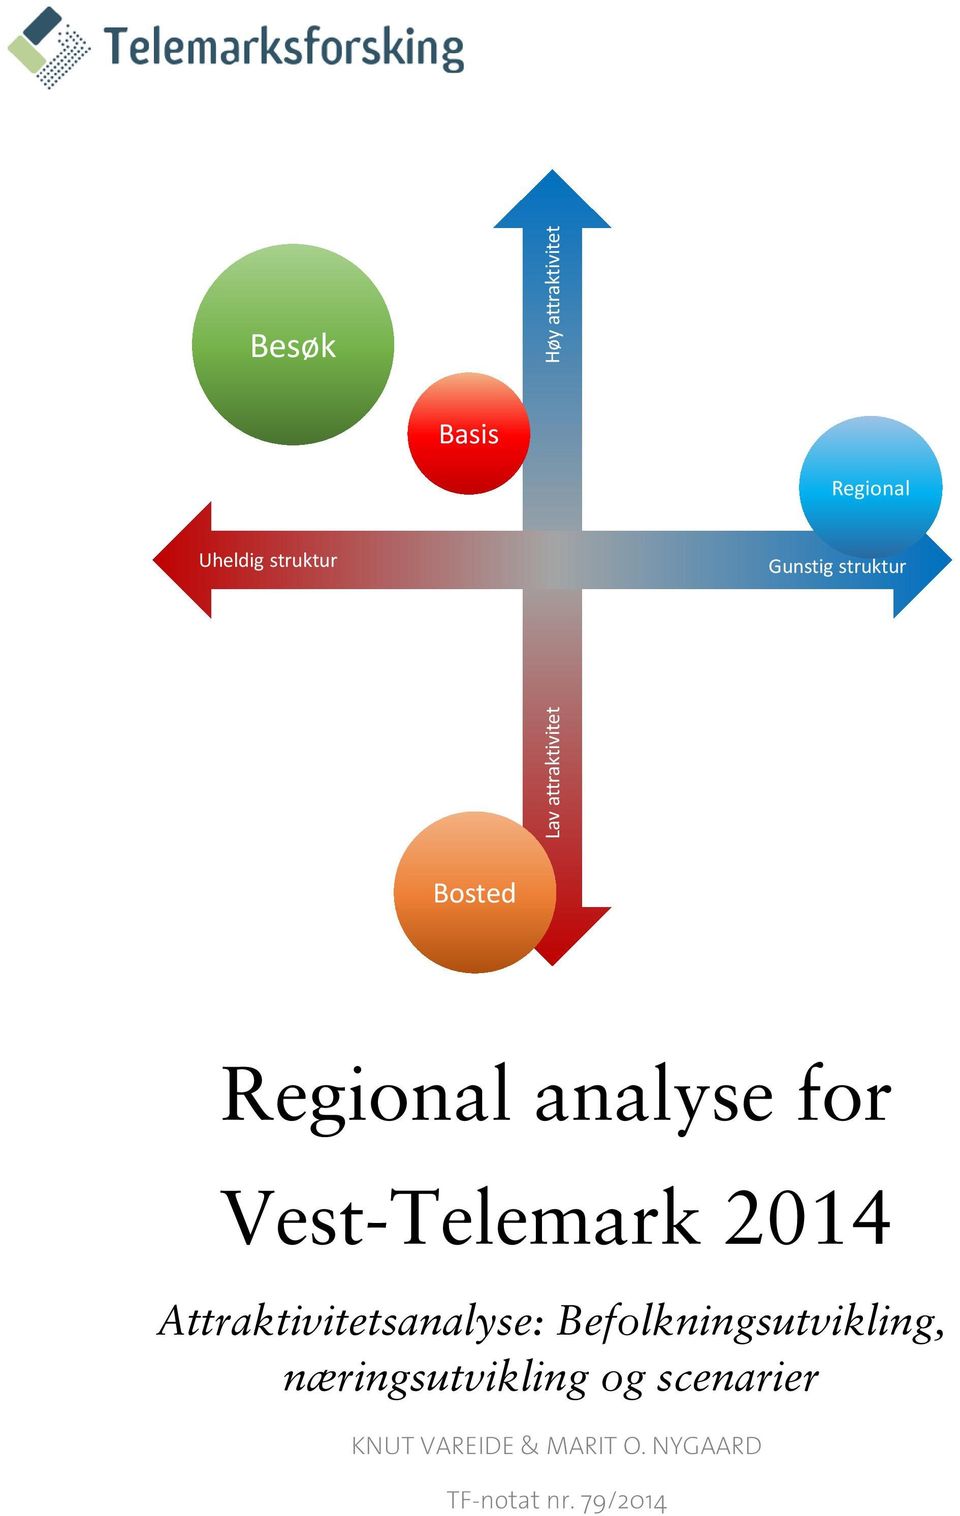 Vest-Telemark 2014 Attraktivitetsanalyse: Befolkningsutvikling,